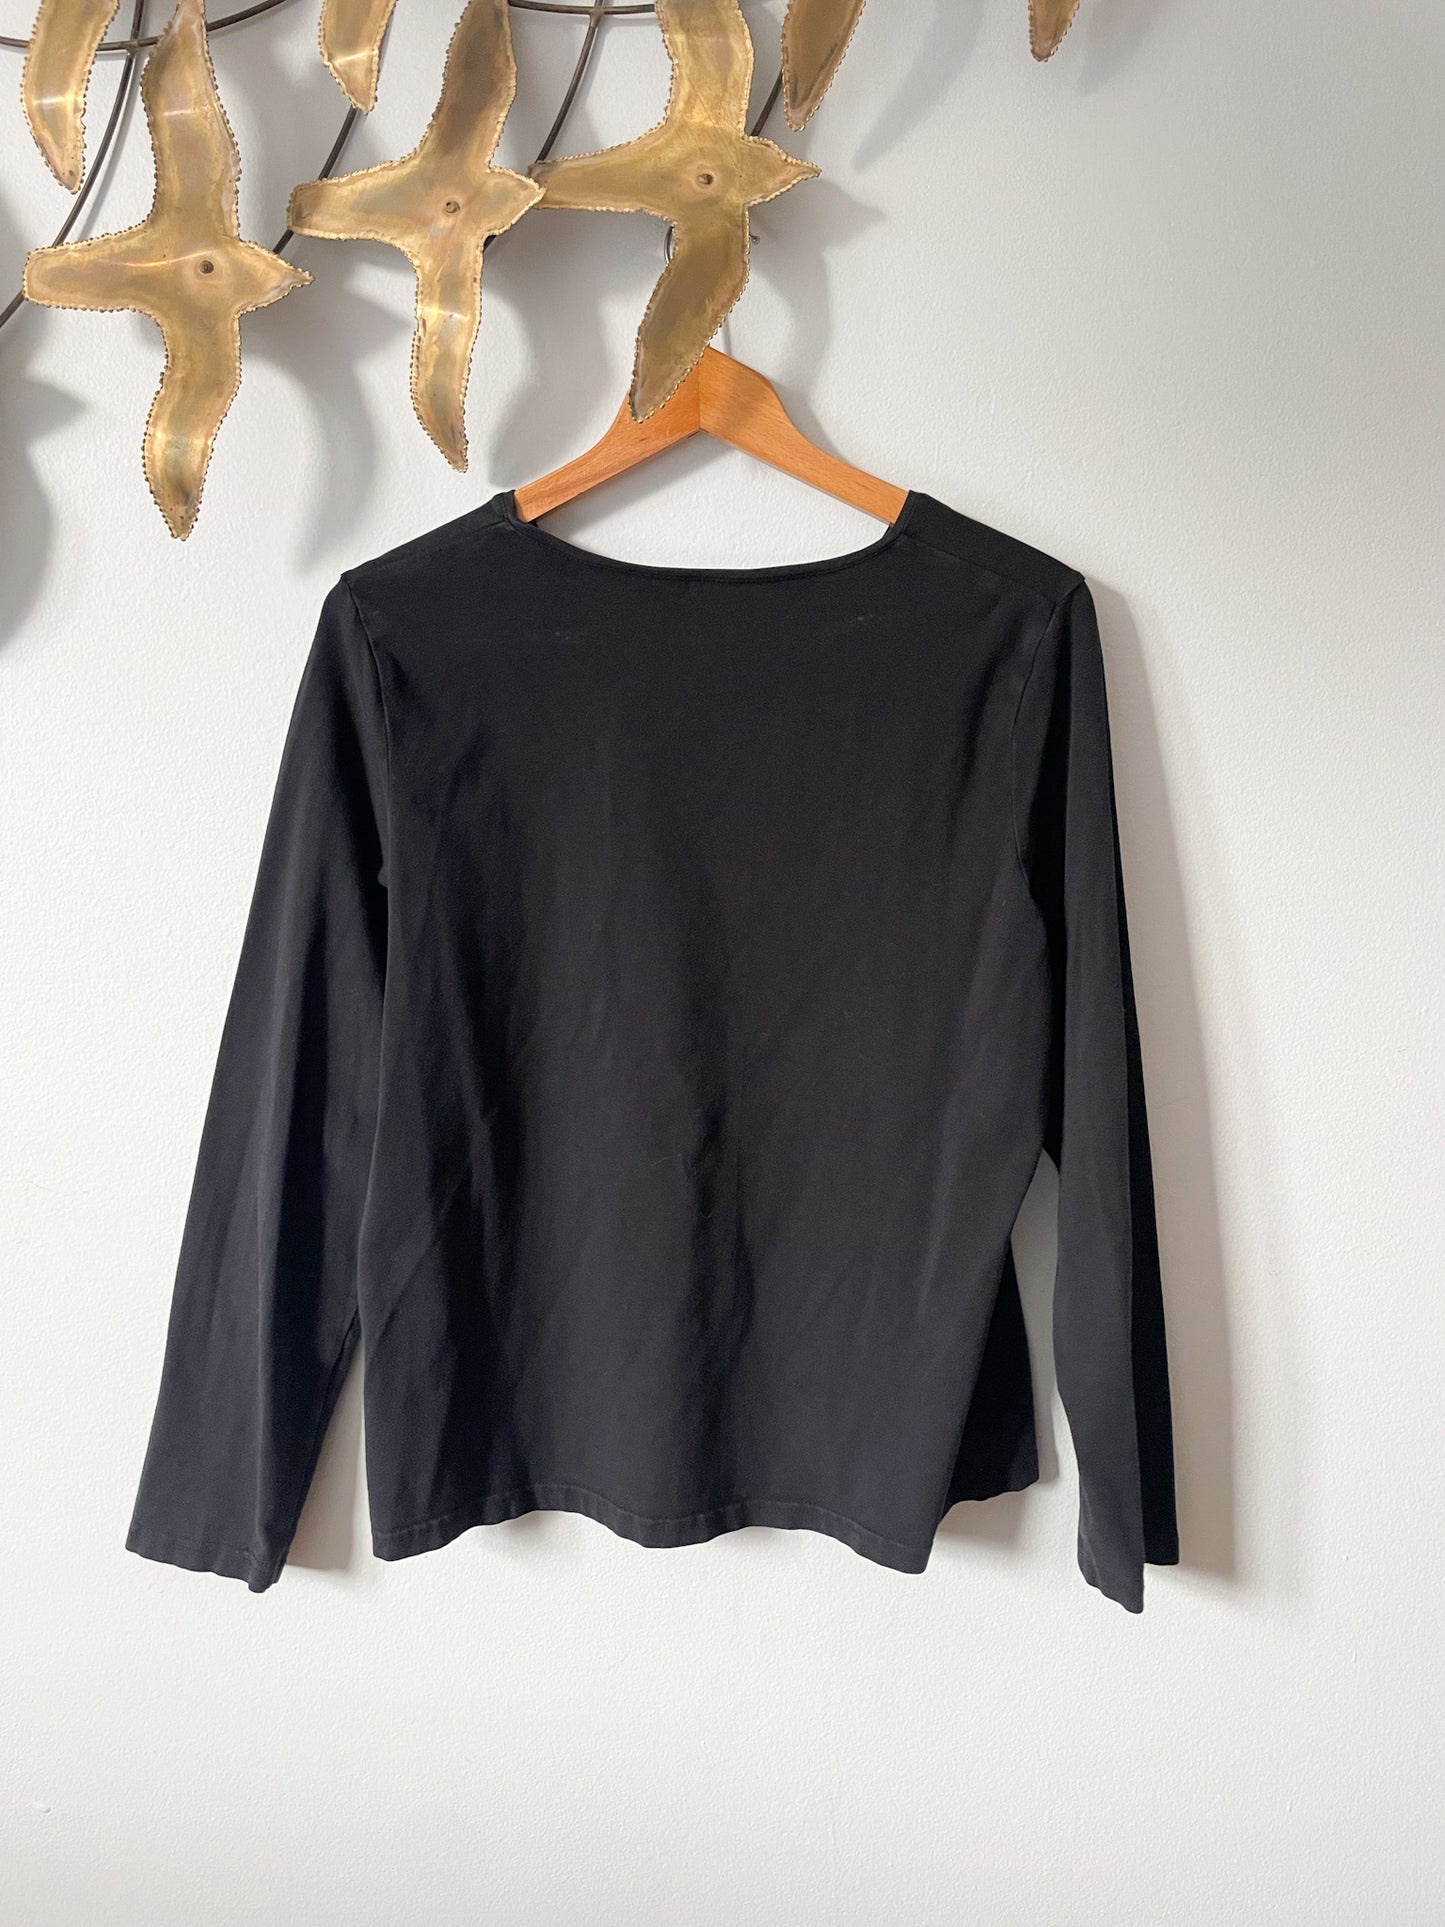 Black Cotton Stretch Long Sleeve Basic Top - XL